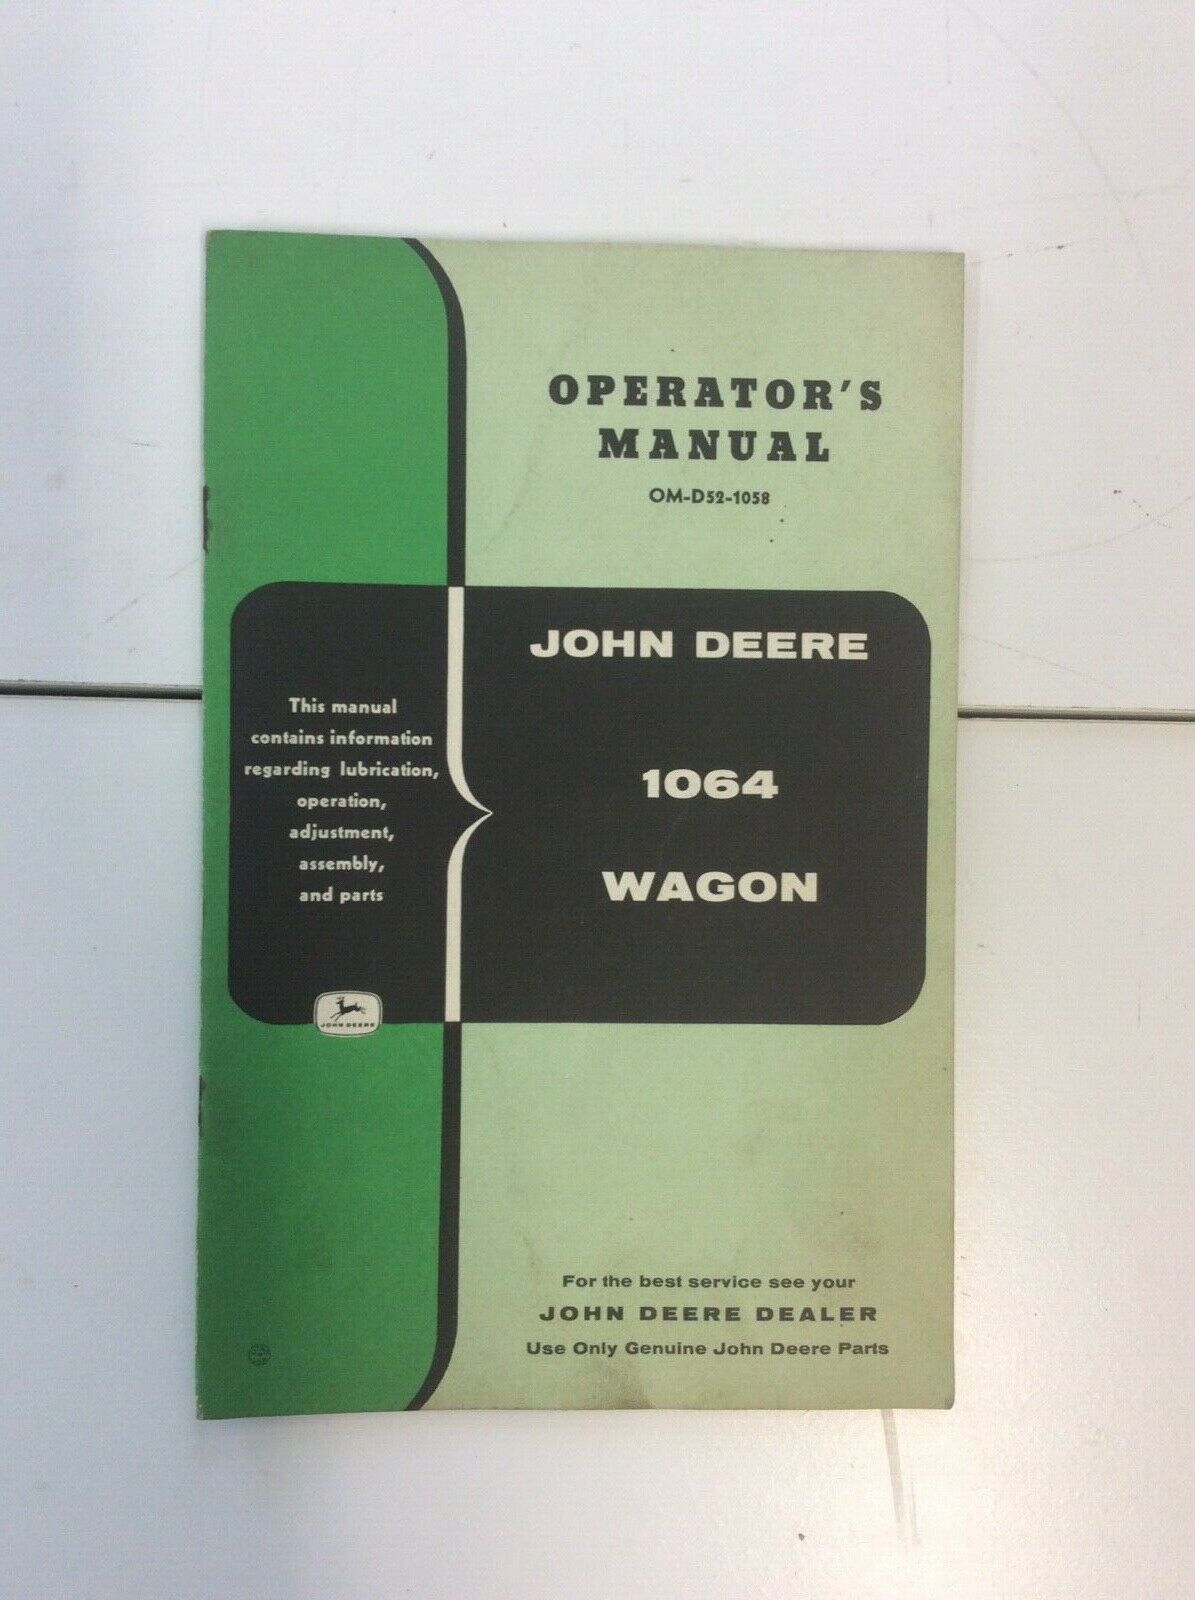 OMD521058 John Deere Operators Manual For 1064 Wagon